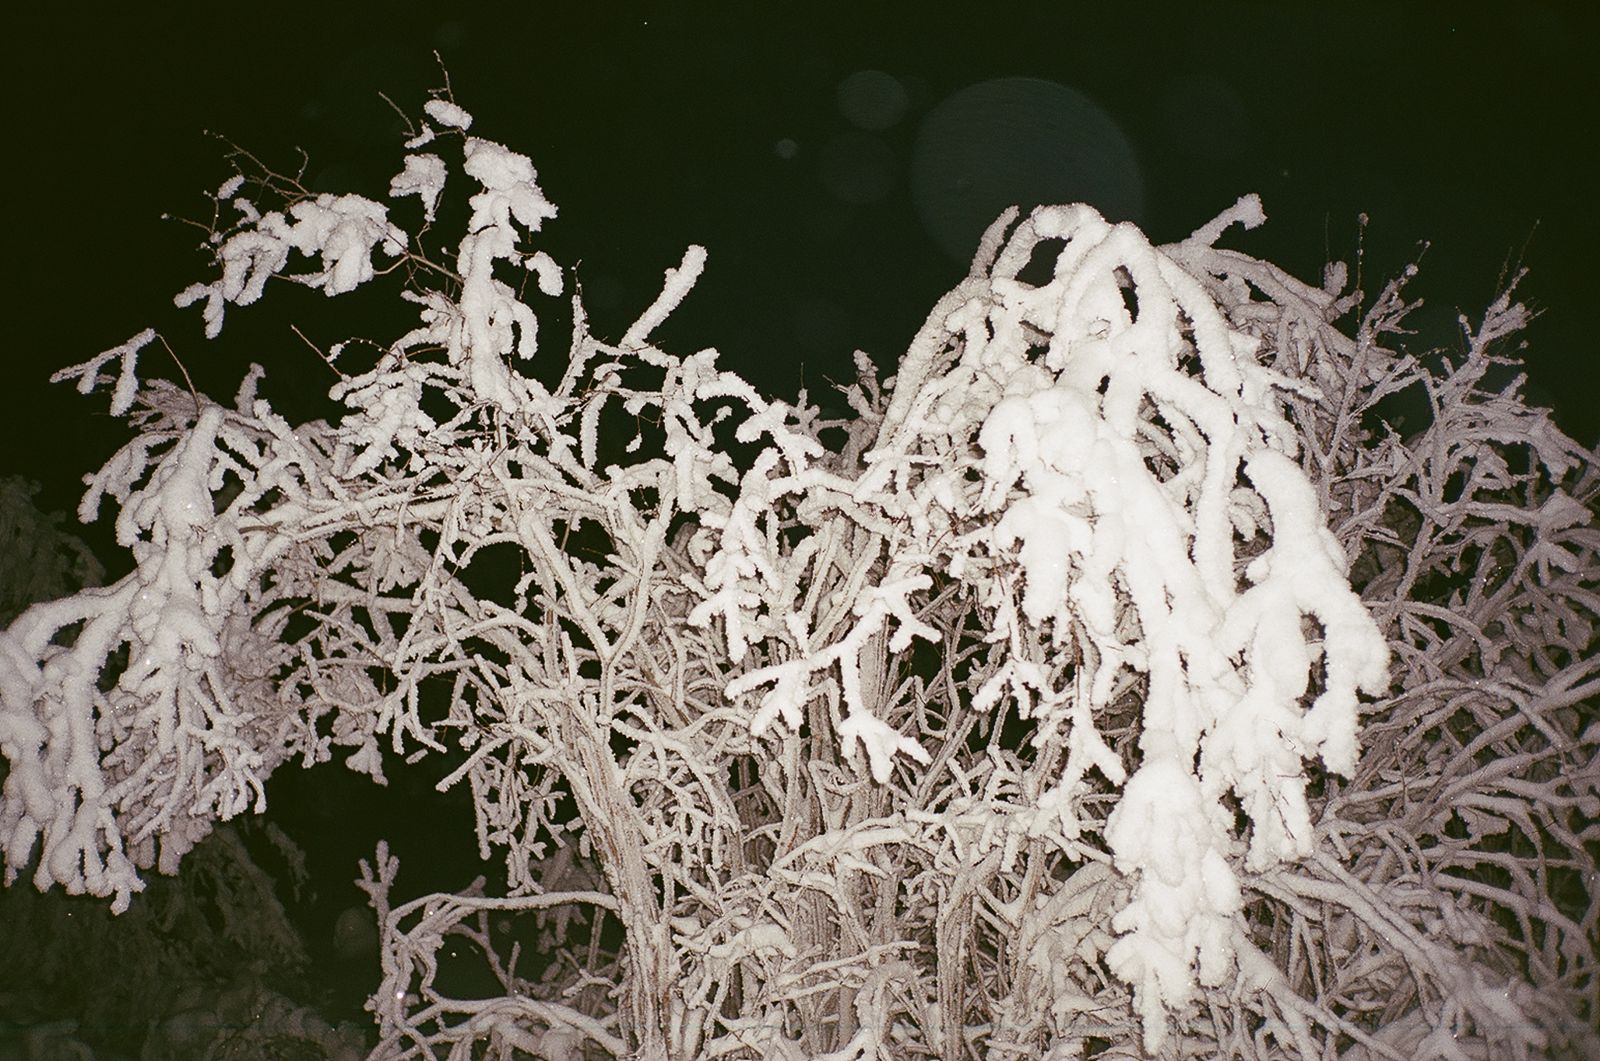 © Ekaterina Anokhina - Image from the 25 weeks of winter photography project